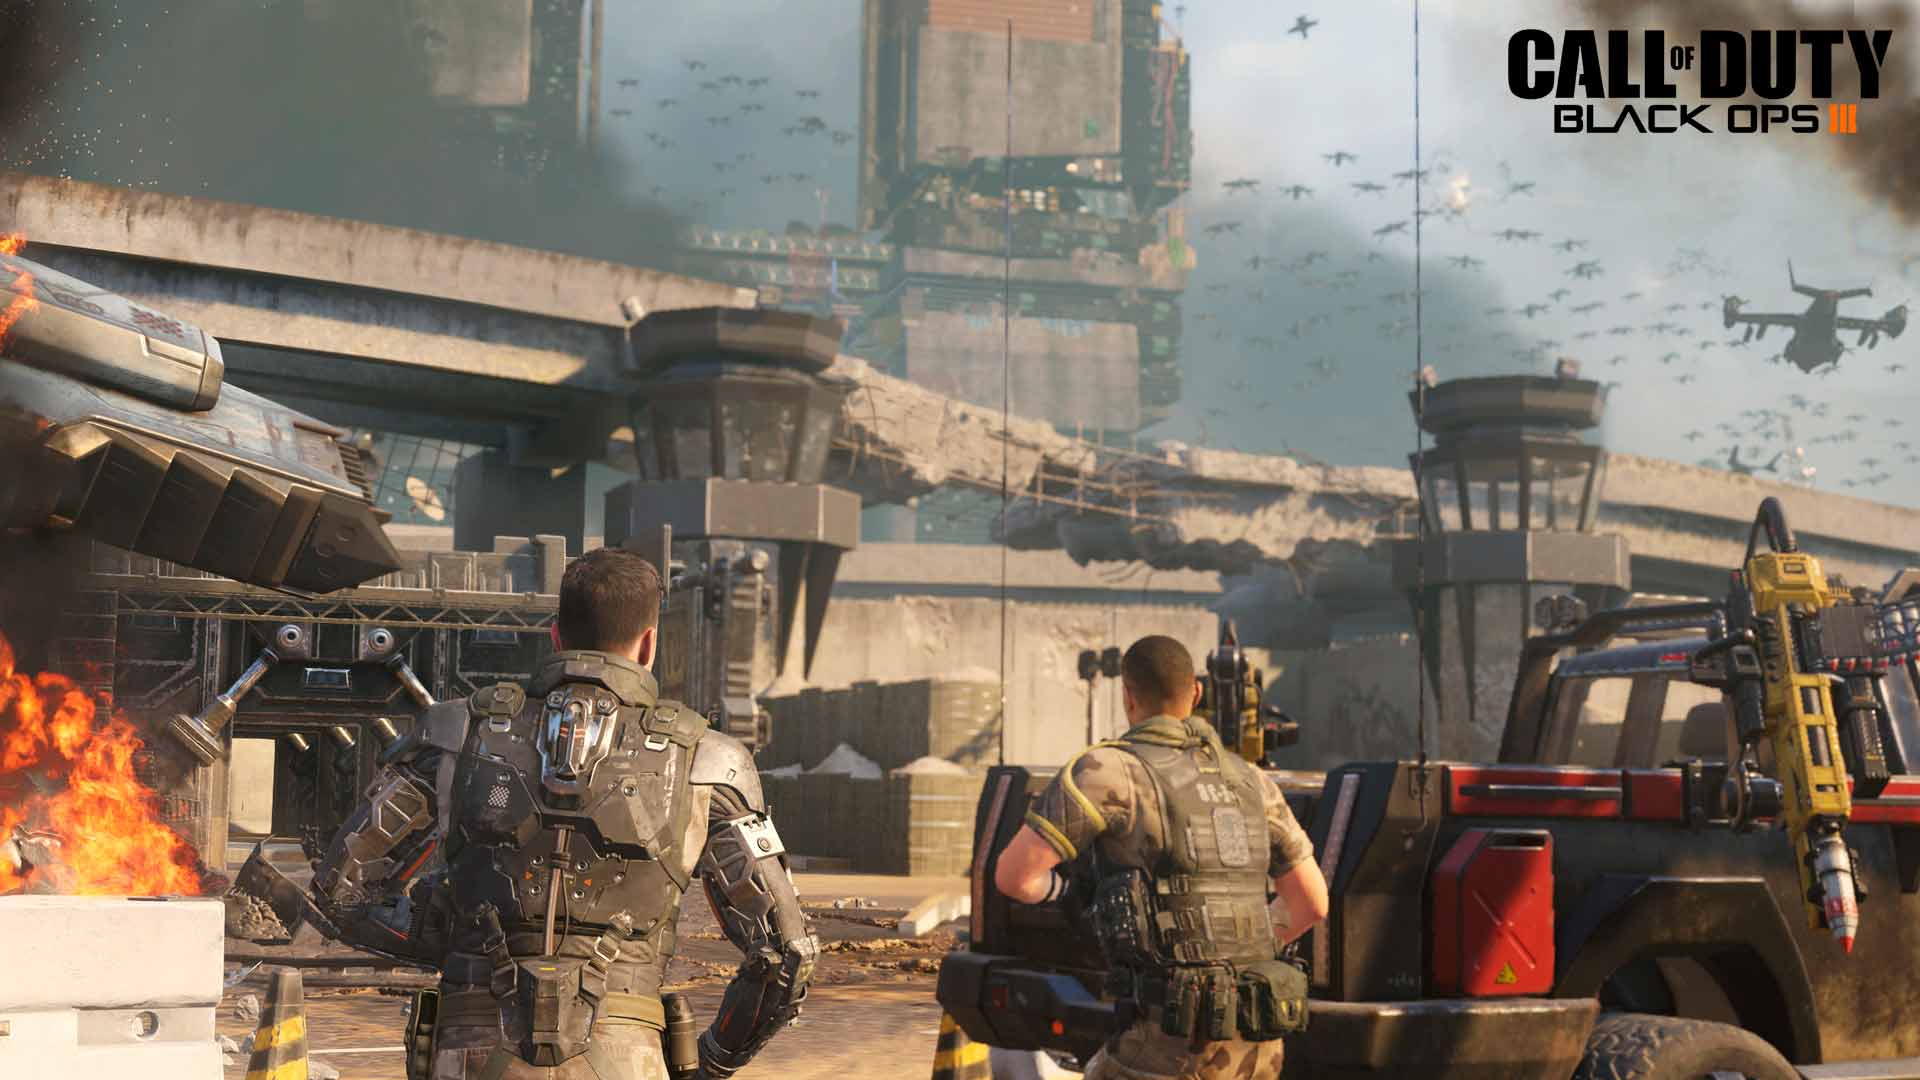 Скриншот к игре Call of Duty: Black Ops 3